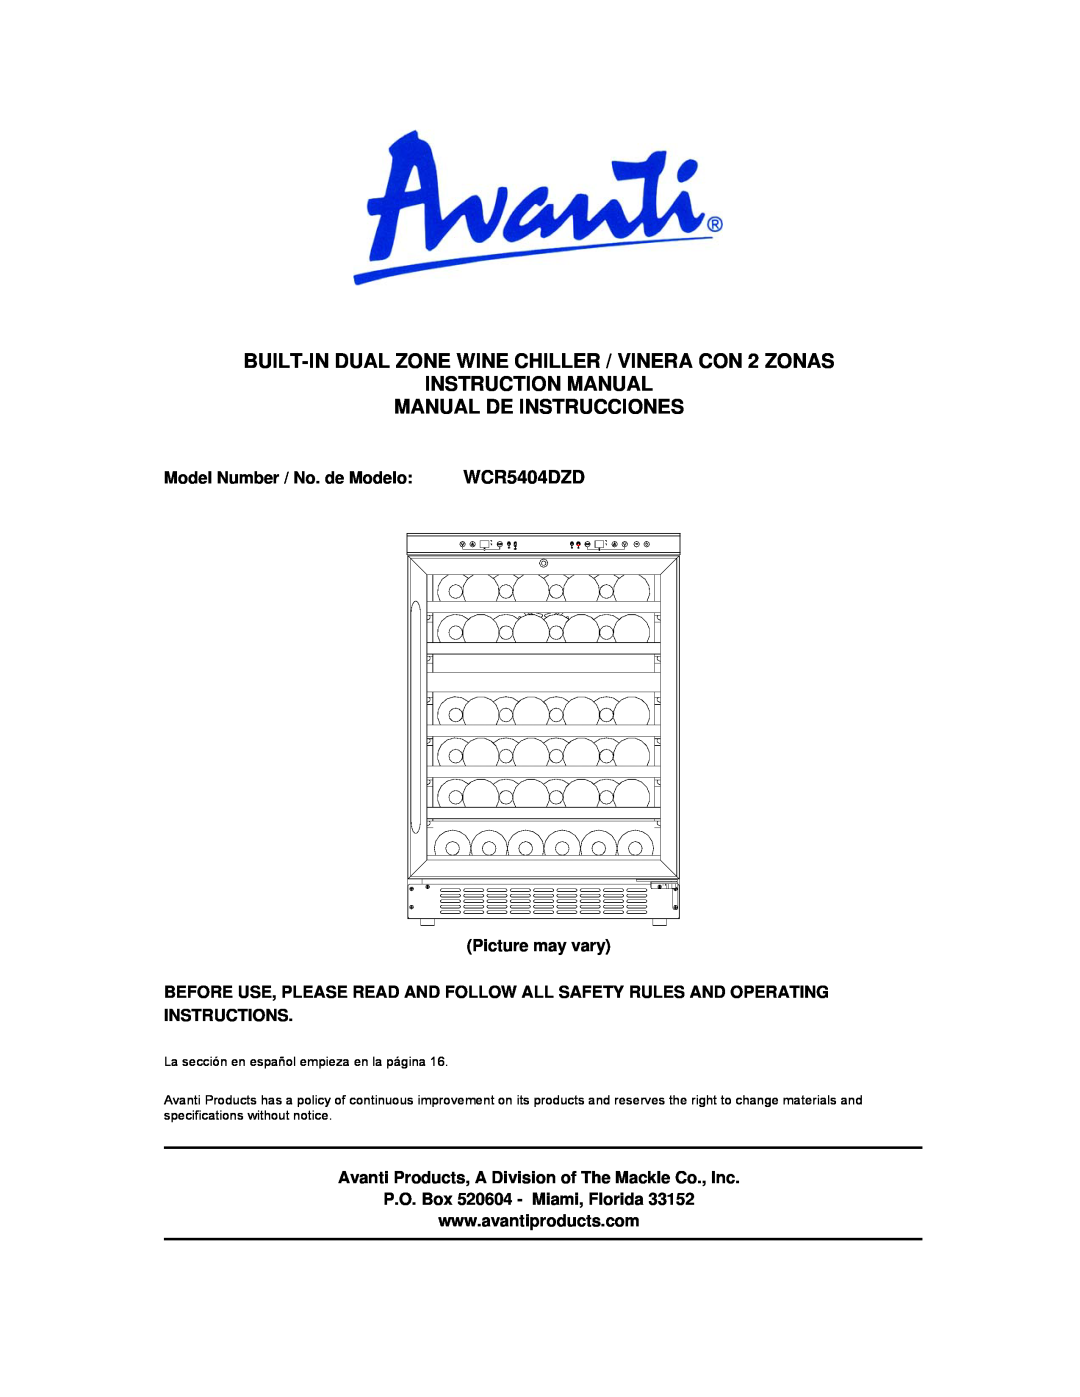 Avanti WCR5404DZD instruction manual BUILT-IN DUAL ZONE WINE CHILLER / VINERA CON 2 ZONAS, Model Number / No. de Modelo 